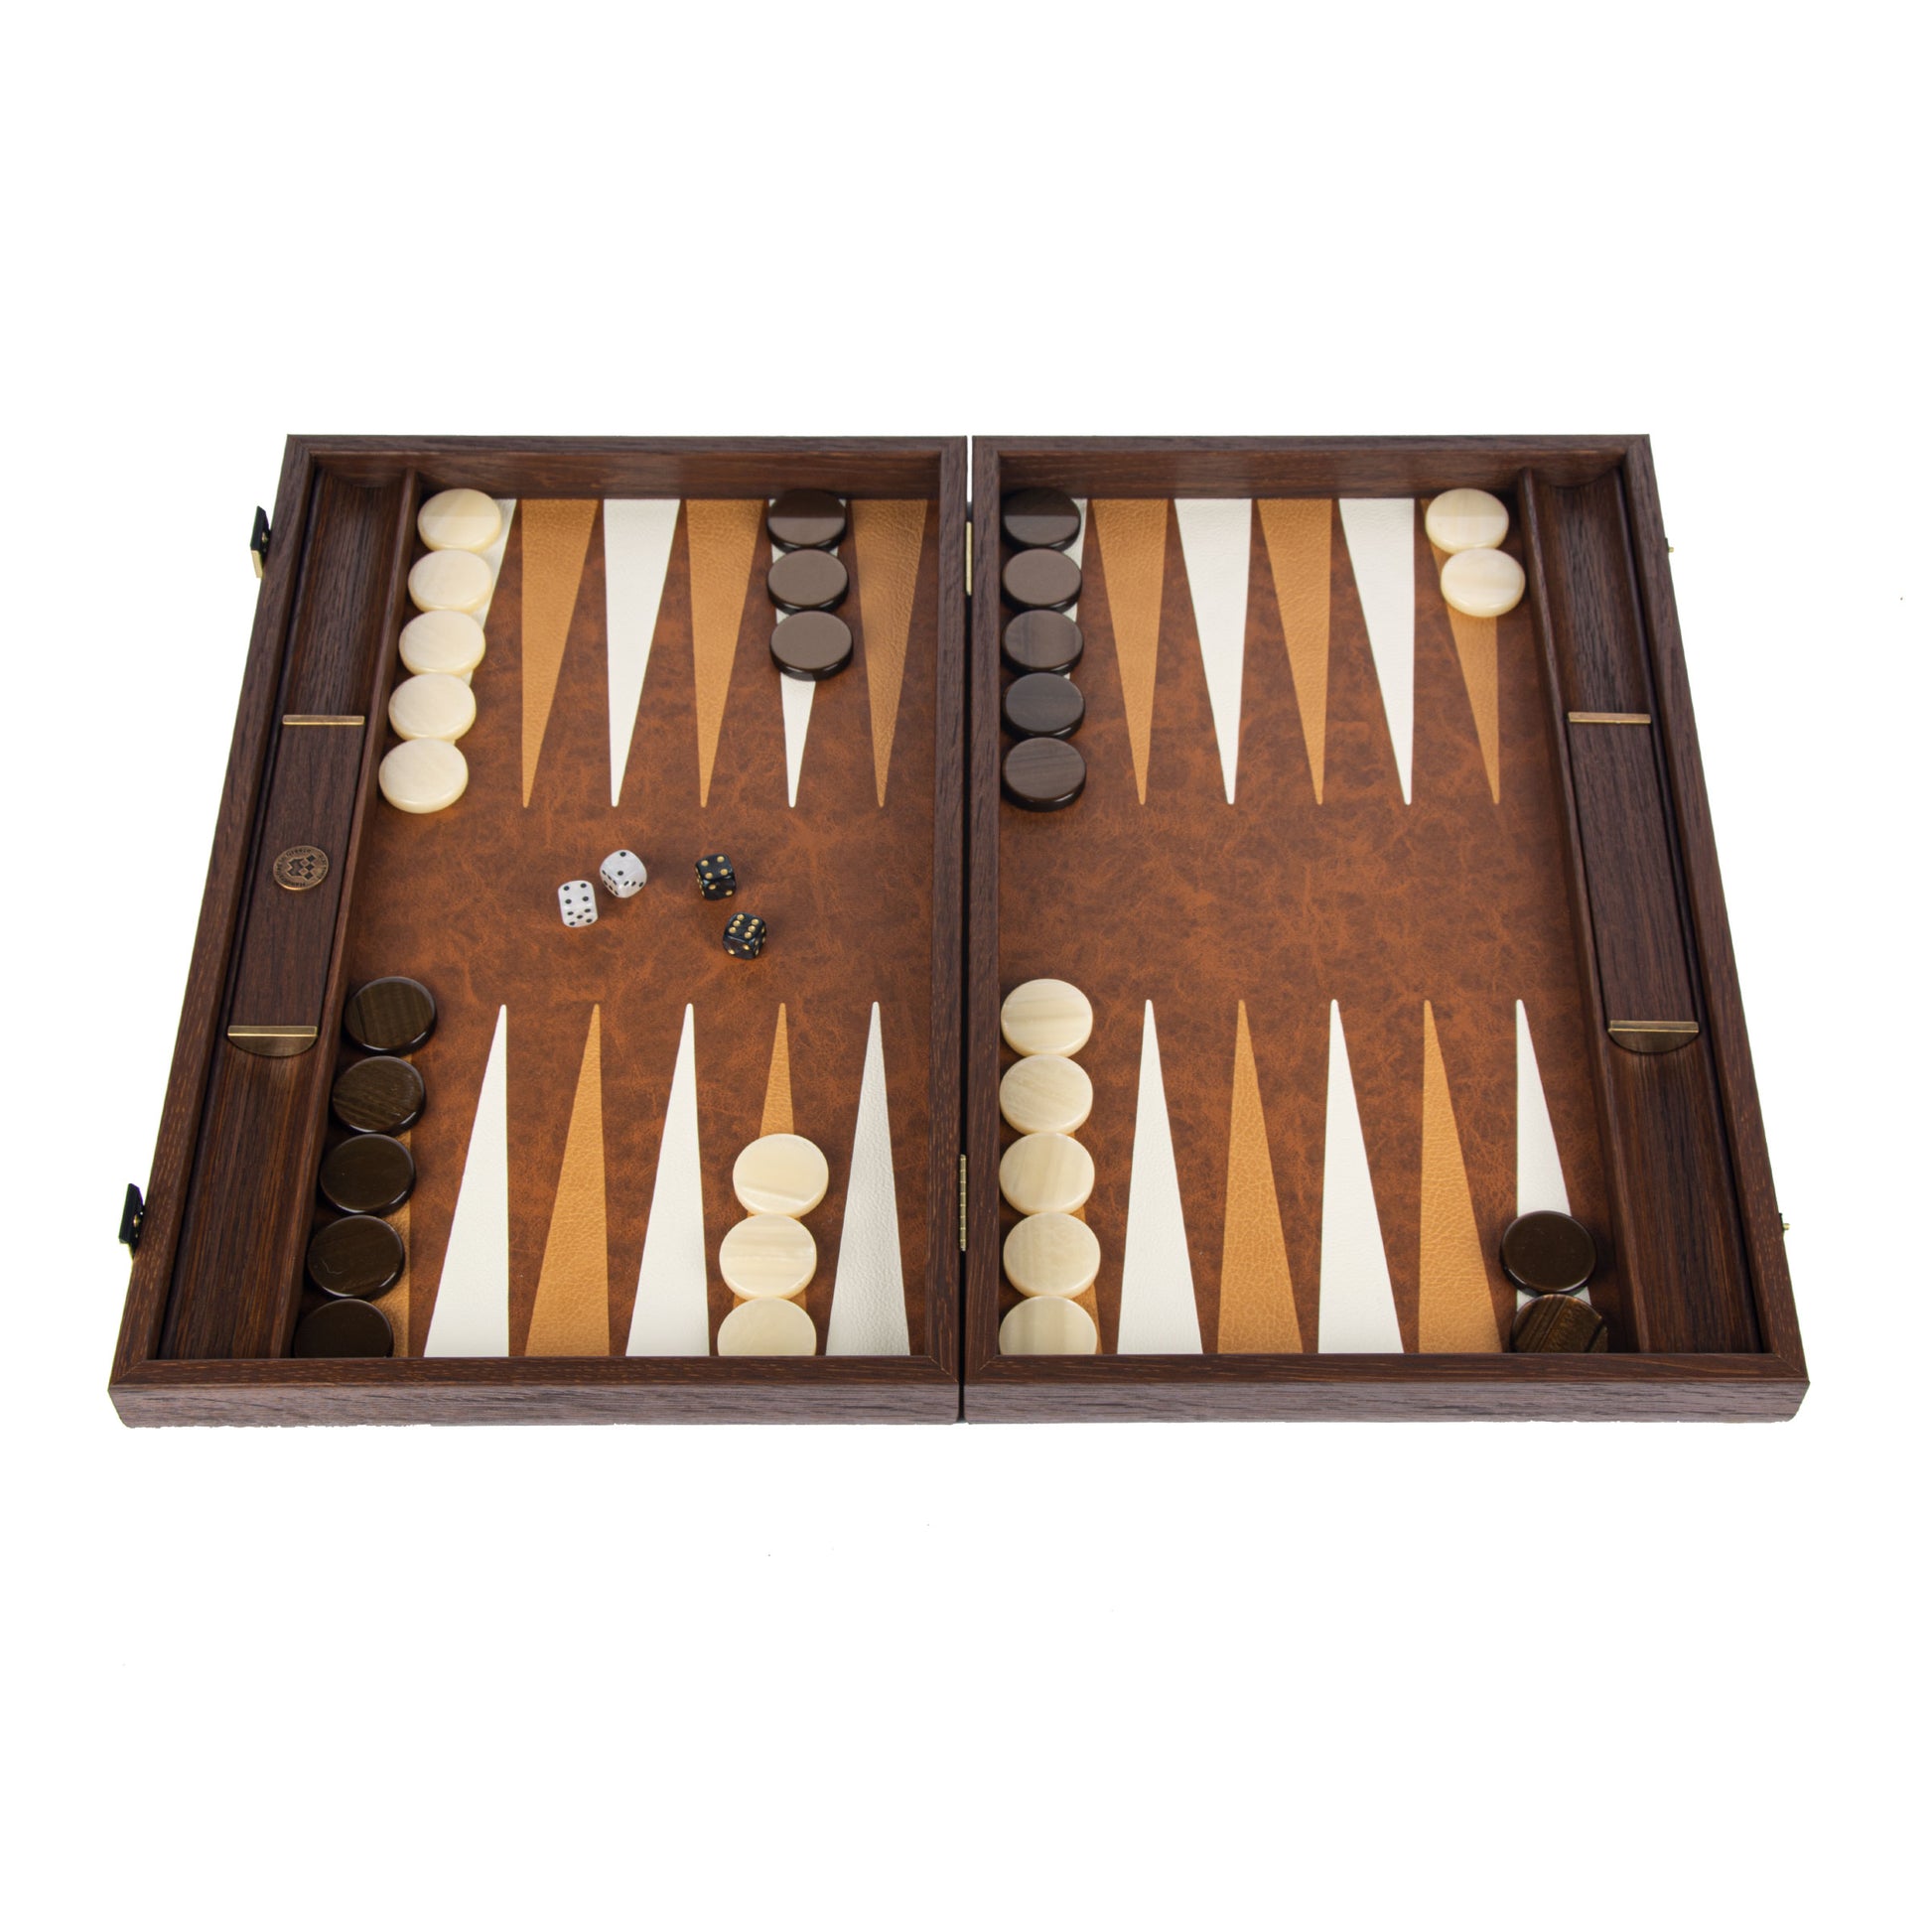 CROCODILE TOTE IN BROWN COLOUR LEATHER Backgammon - Premium Backgammon from MANOPOULOS Chess & Backgammon - Just €490! Shop now at MANOPOULOS Chess & Backgammon